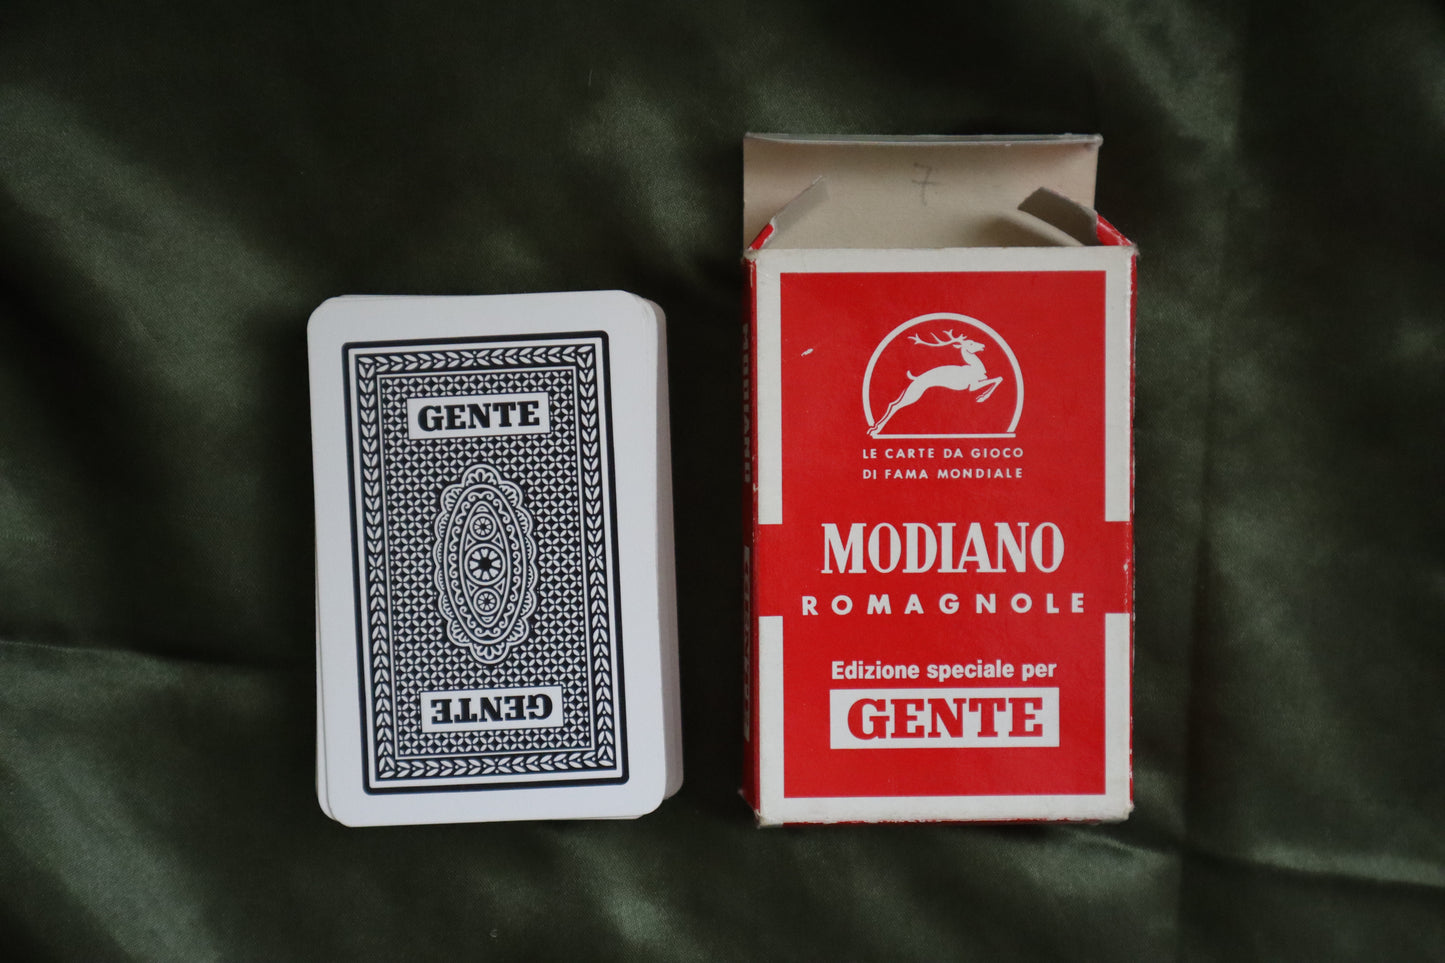 Vintage Regional Playing Cards - Emilia Romagnole